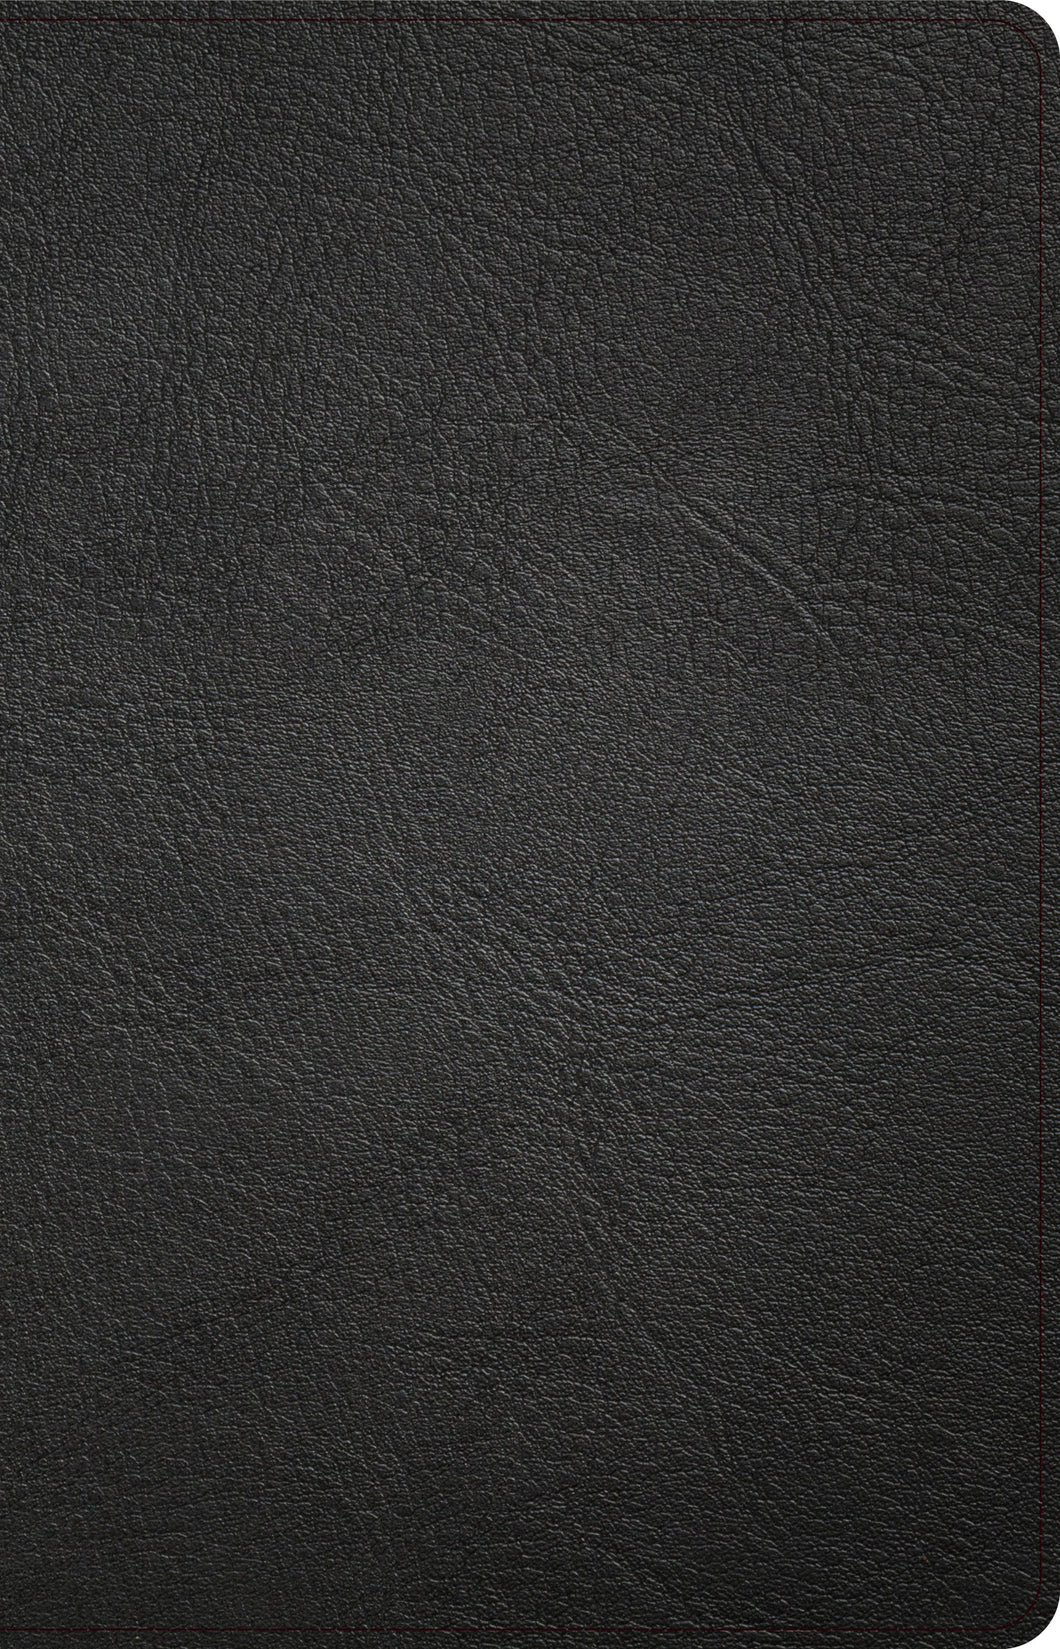 CSB Thinline Bible-Black Genuine Leather